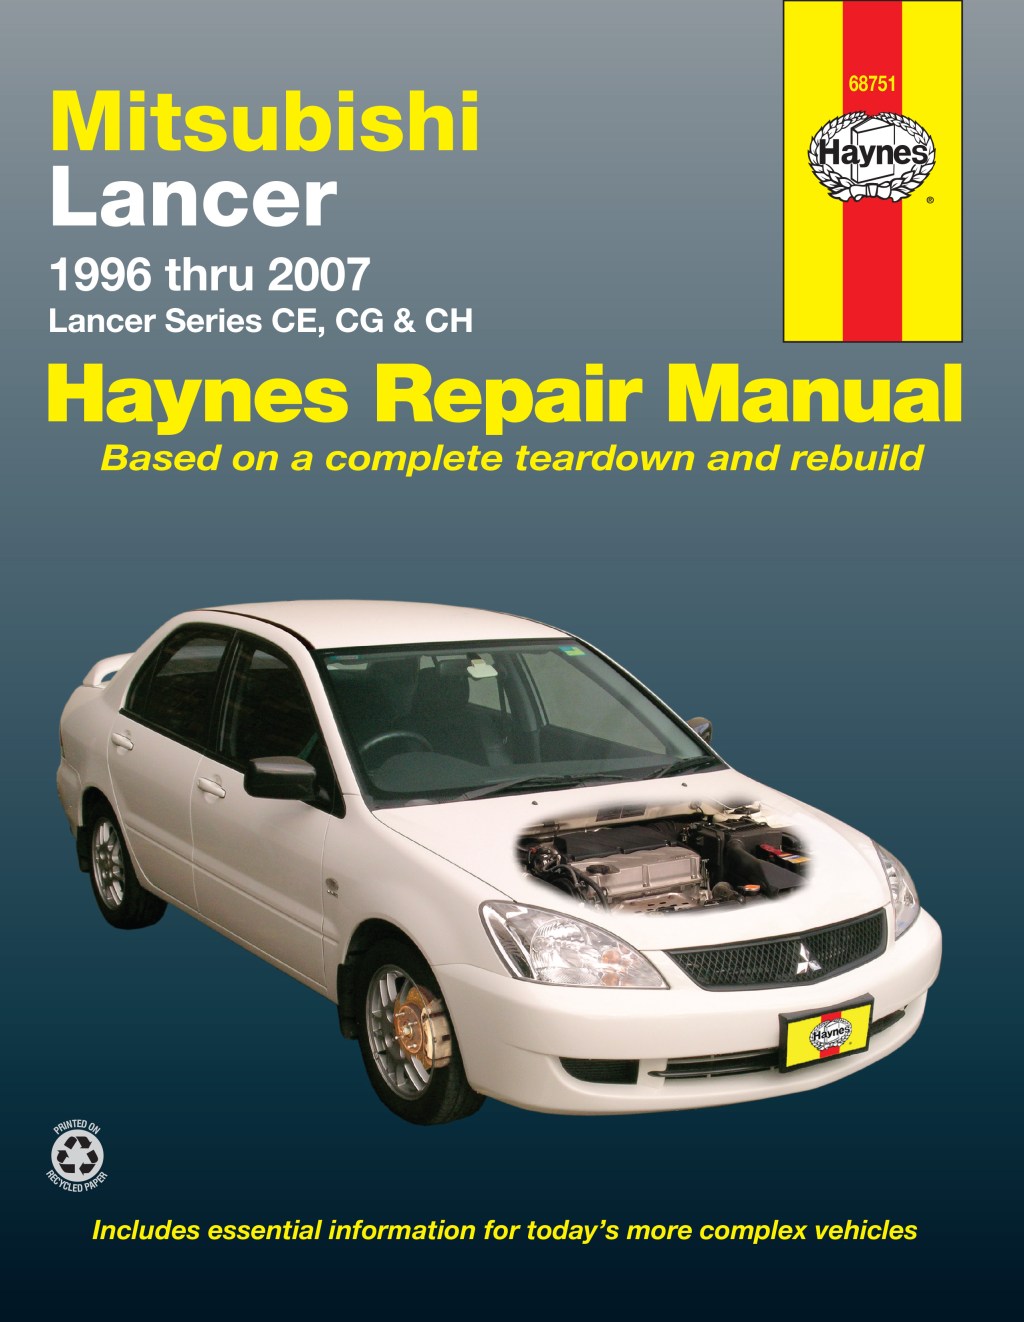 Picture of: Mitsubishi Lancer (-) Haynes Repair Manual (AUS)